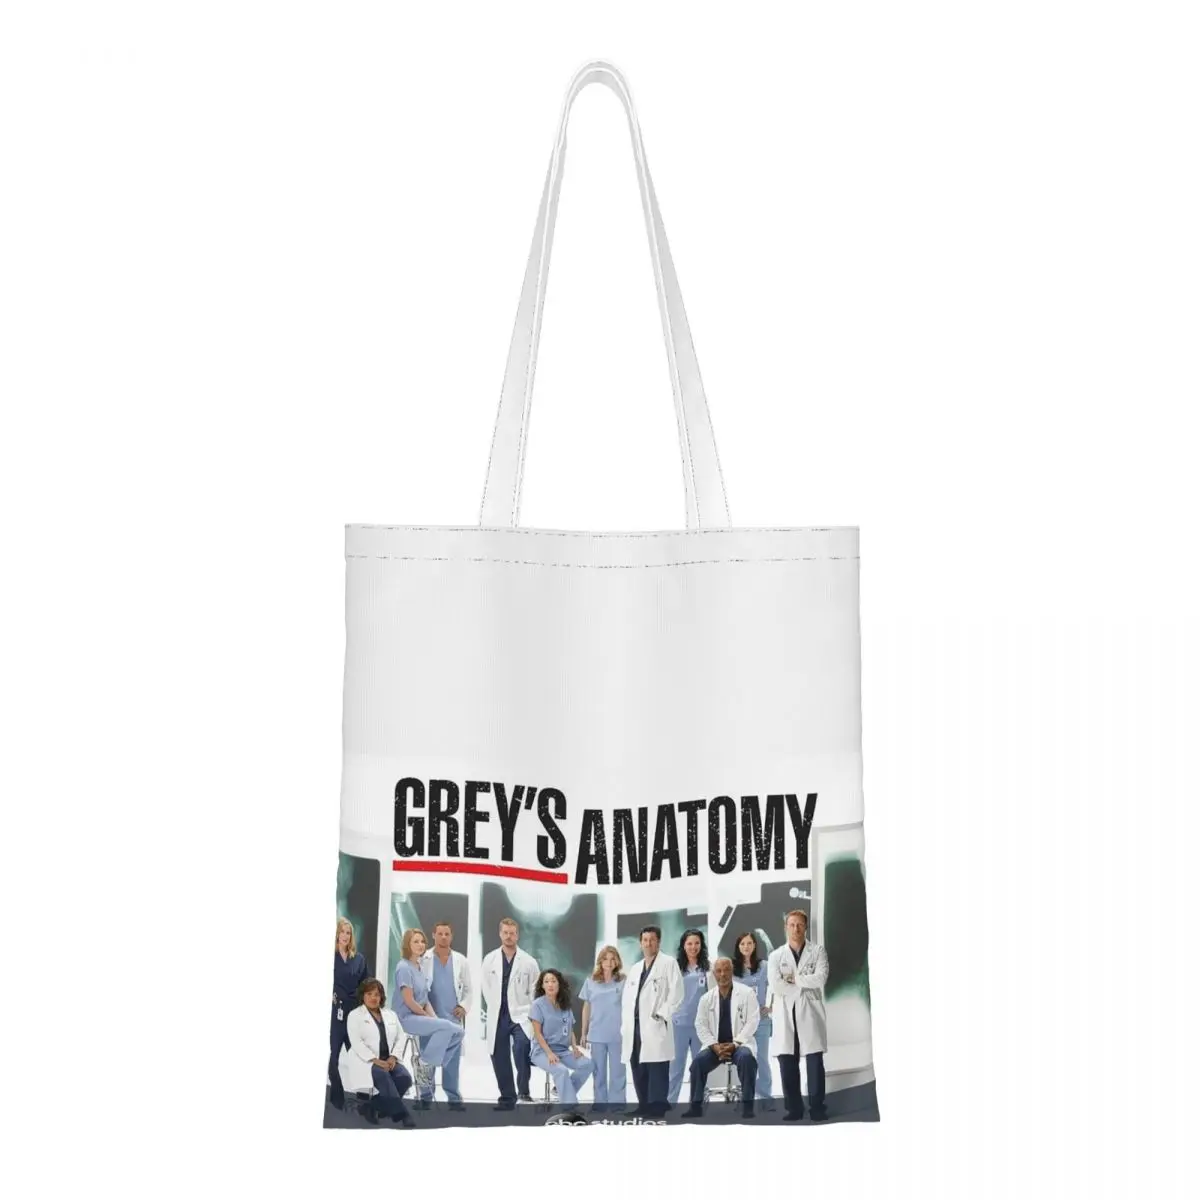 

Meredith Grey Derek Shepherd Cristina Yang Shoulder Bag Female Canvas Shopping Bags Grey's Anatomy Large Capacity Shopping Tote